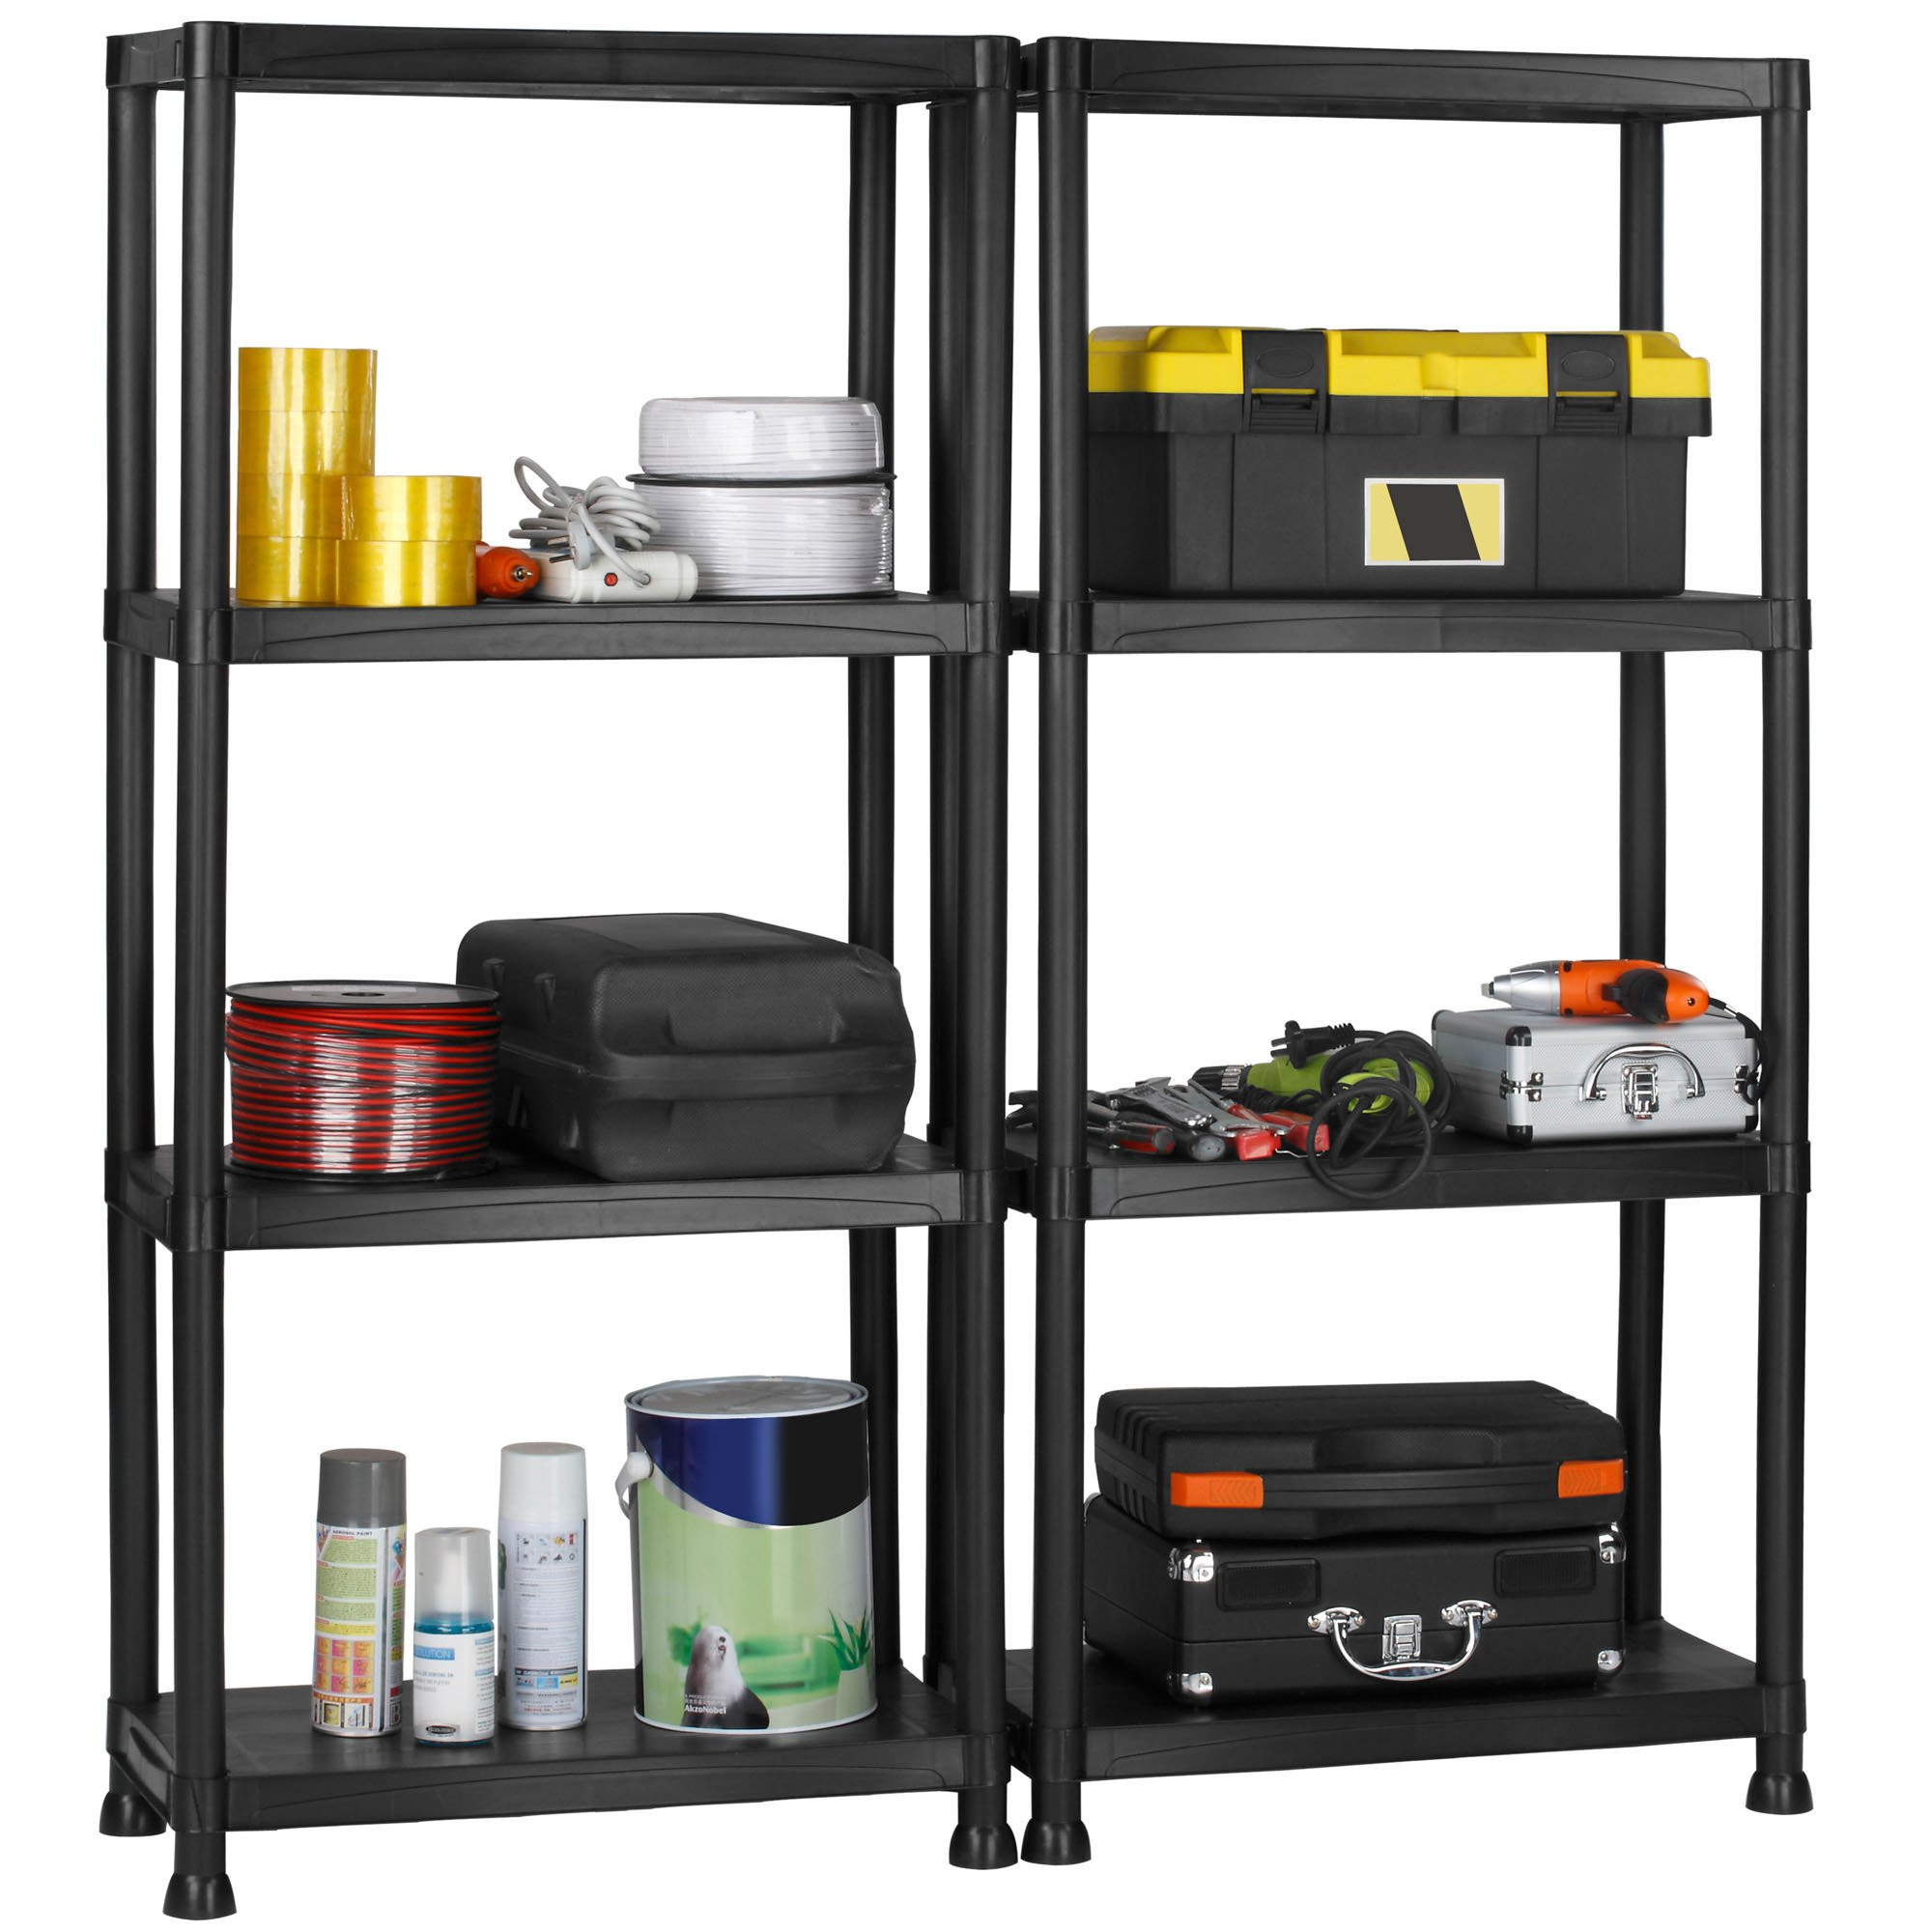 Best ideas about Garage Storage Shelves
. Save or Pin VonHaus 4 Tier Garage Shelving Unit with Wall Brackets Now.